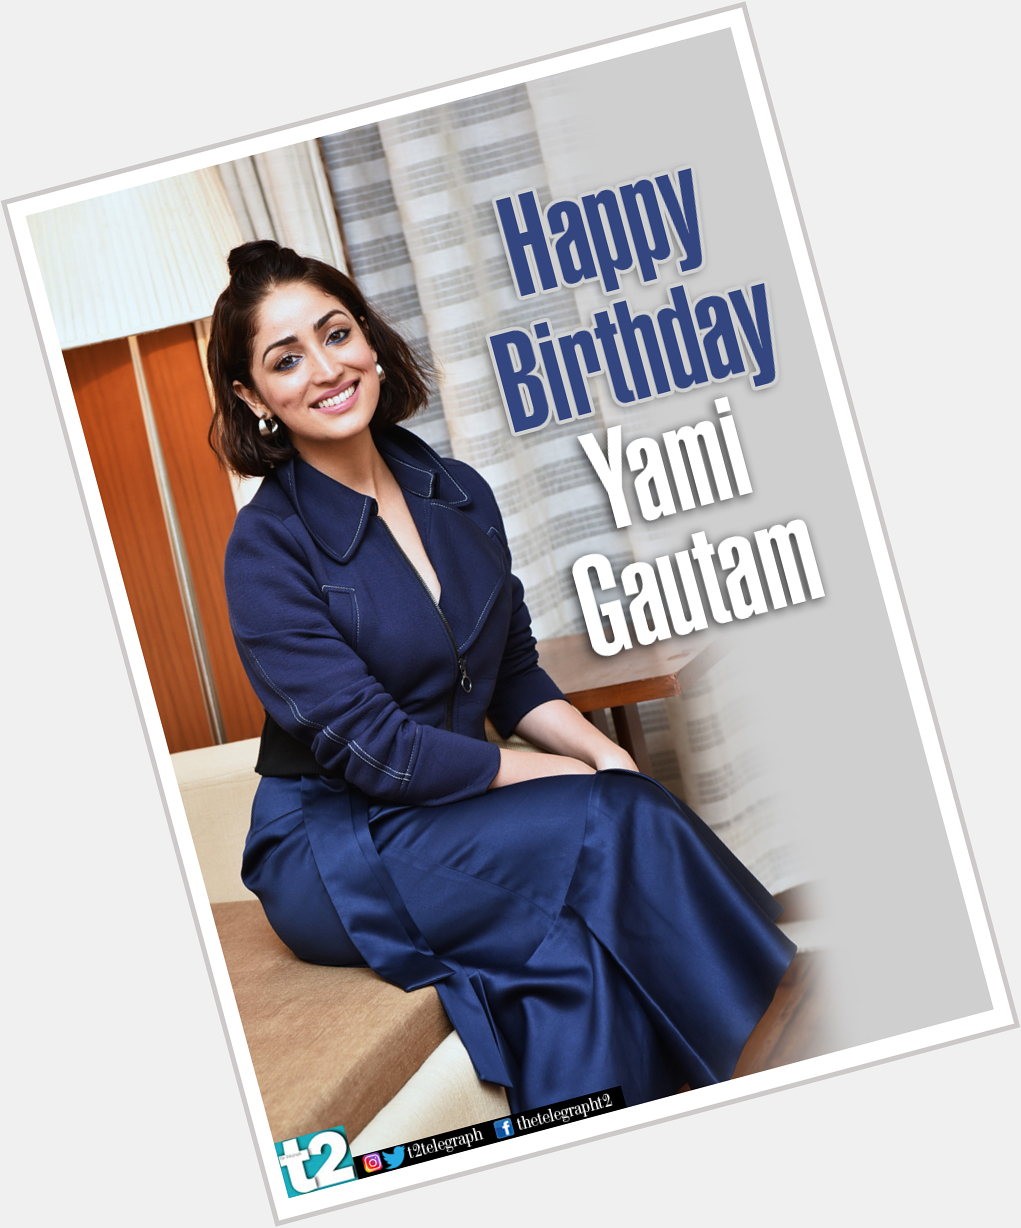 Uri to Bala, she s on a roll! t2 wishes Yami Gautam a very happy birthday! 